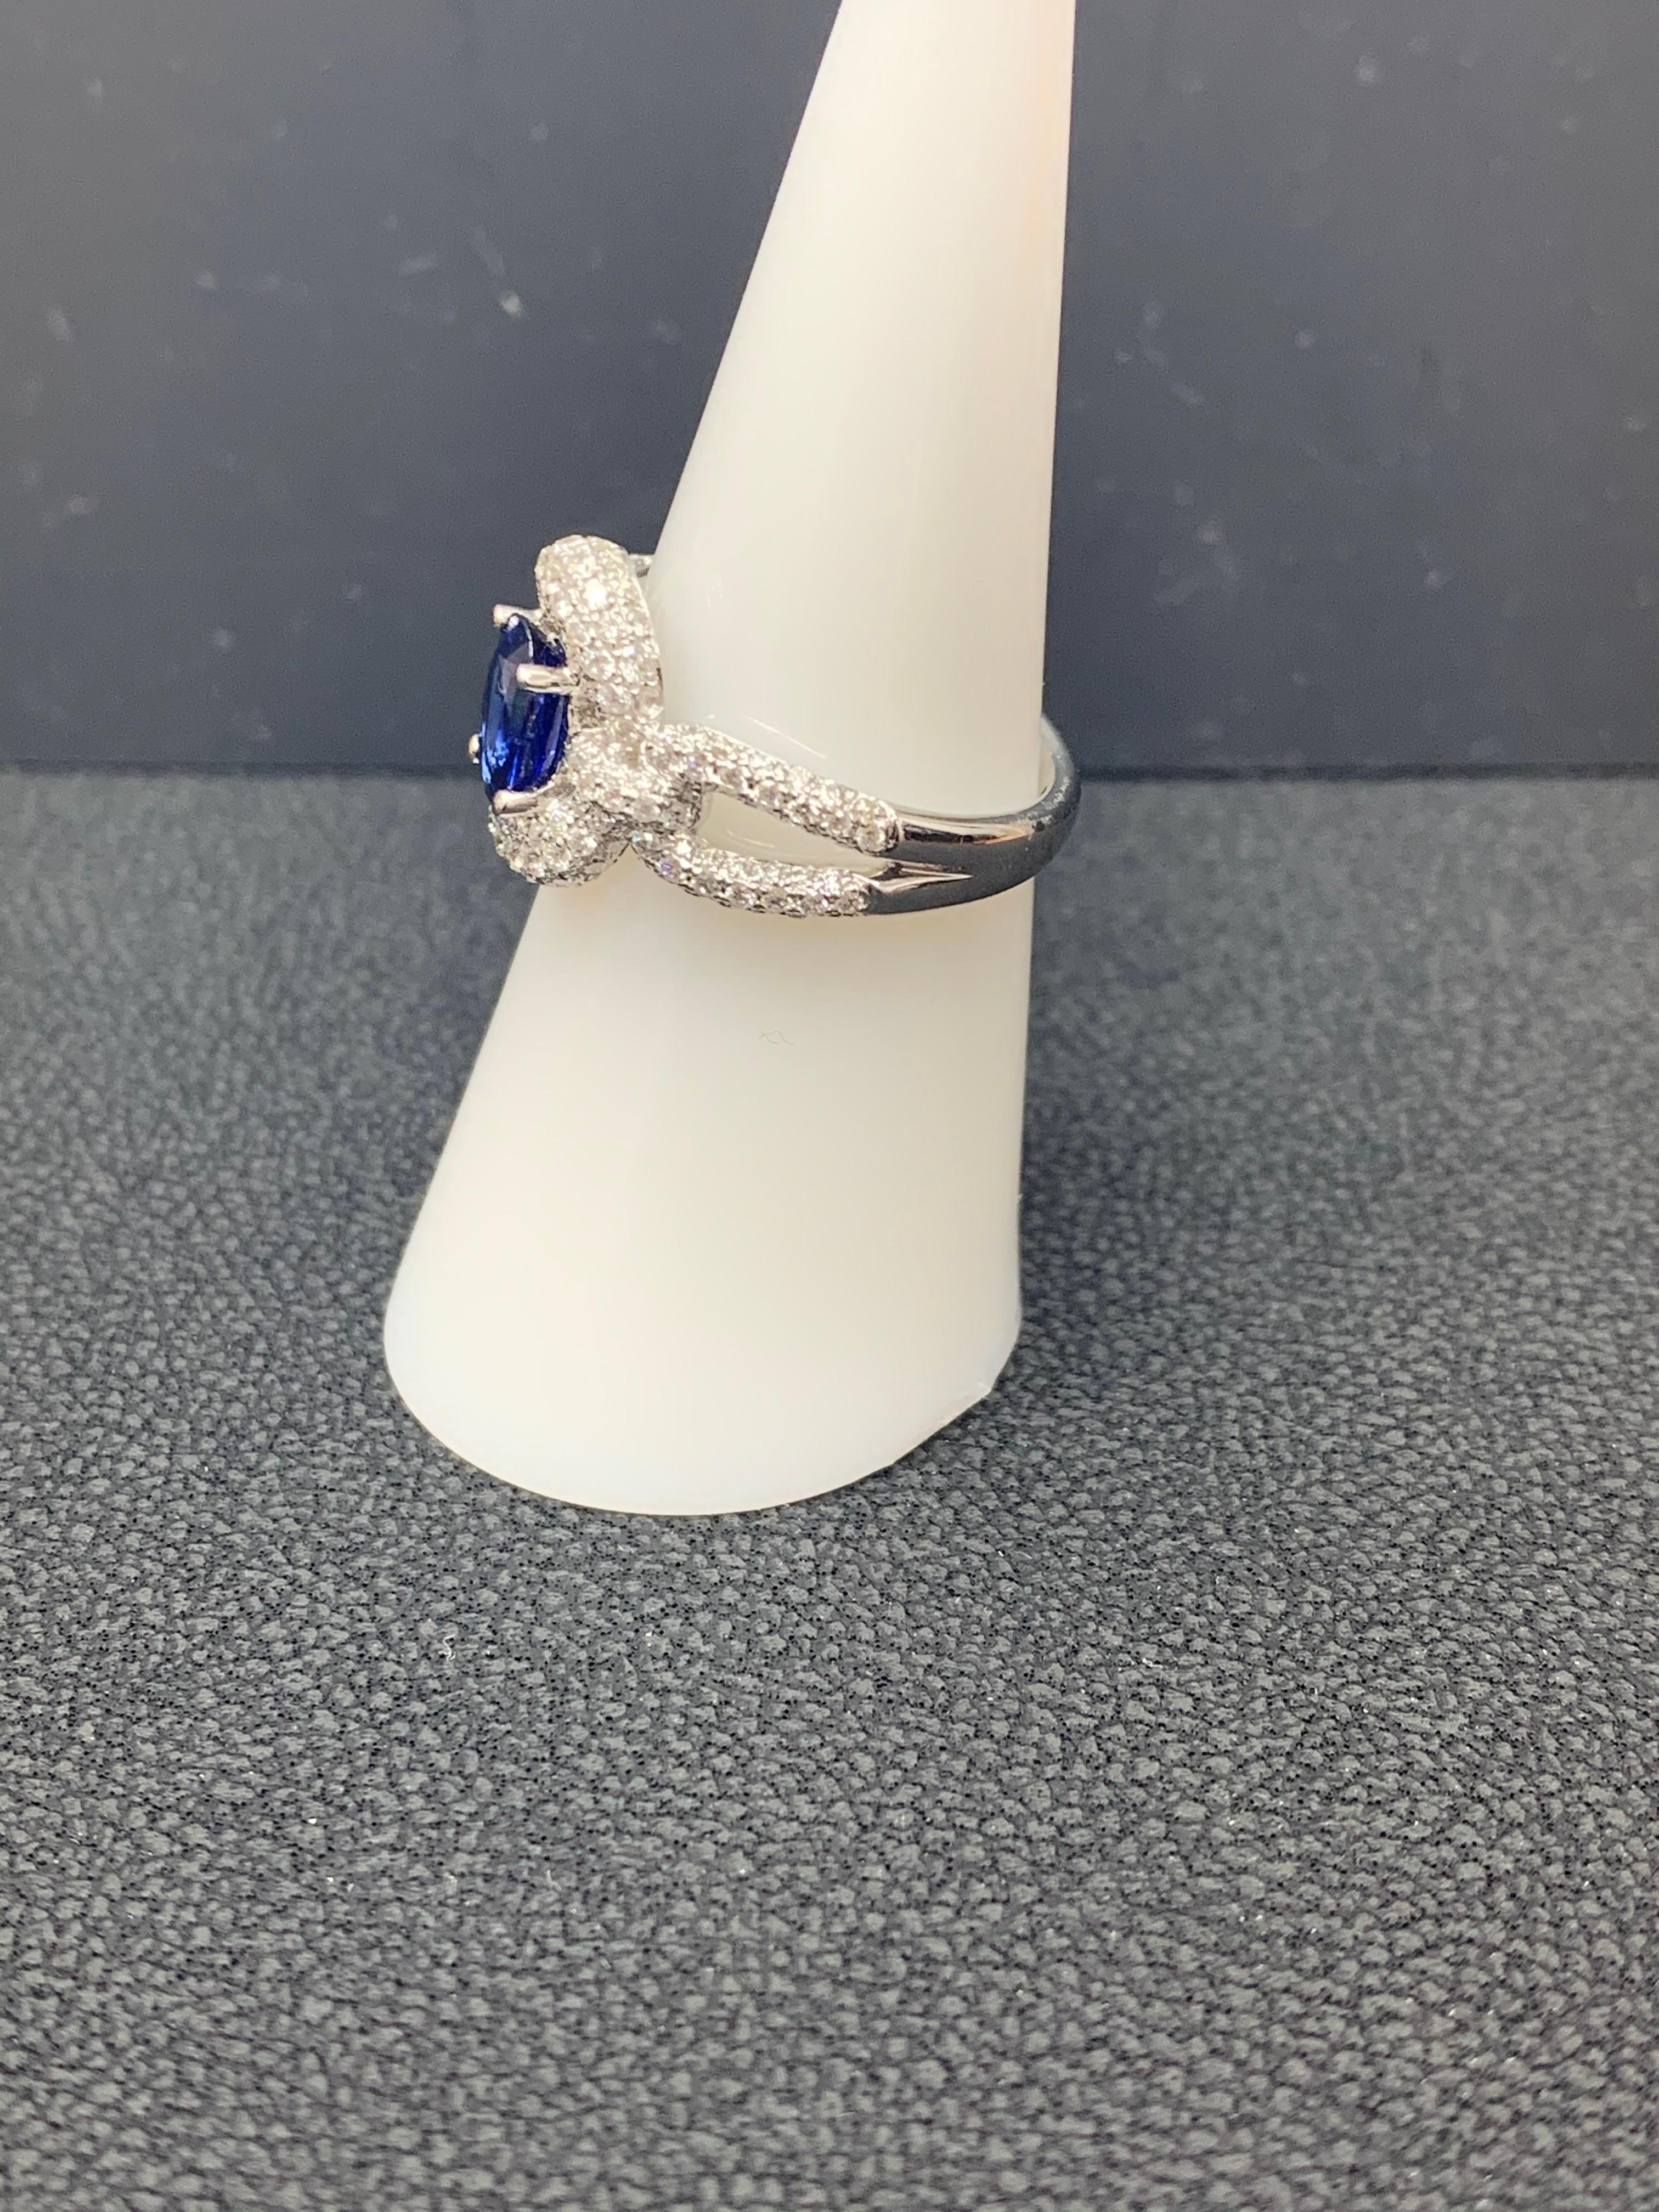 Grandeur 0.94 Carat Oval Blue Sapphire Diamond 18K White Gold Engagement Ring For Sale 1